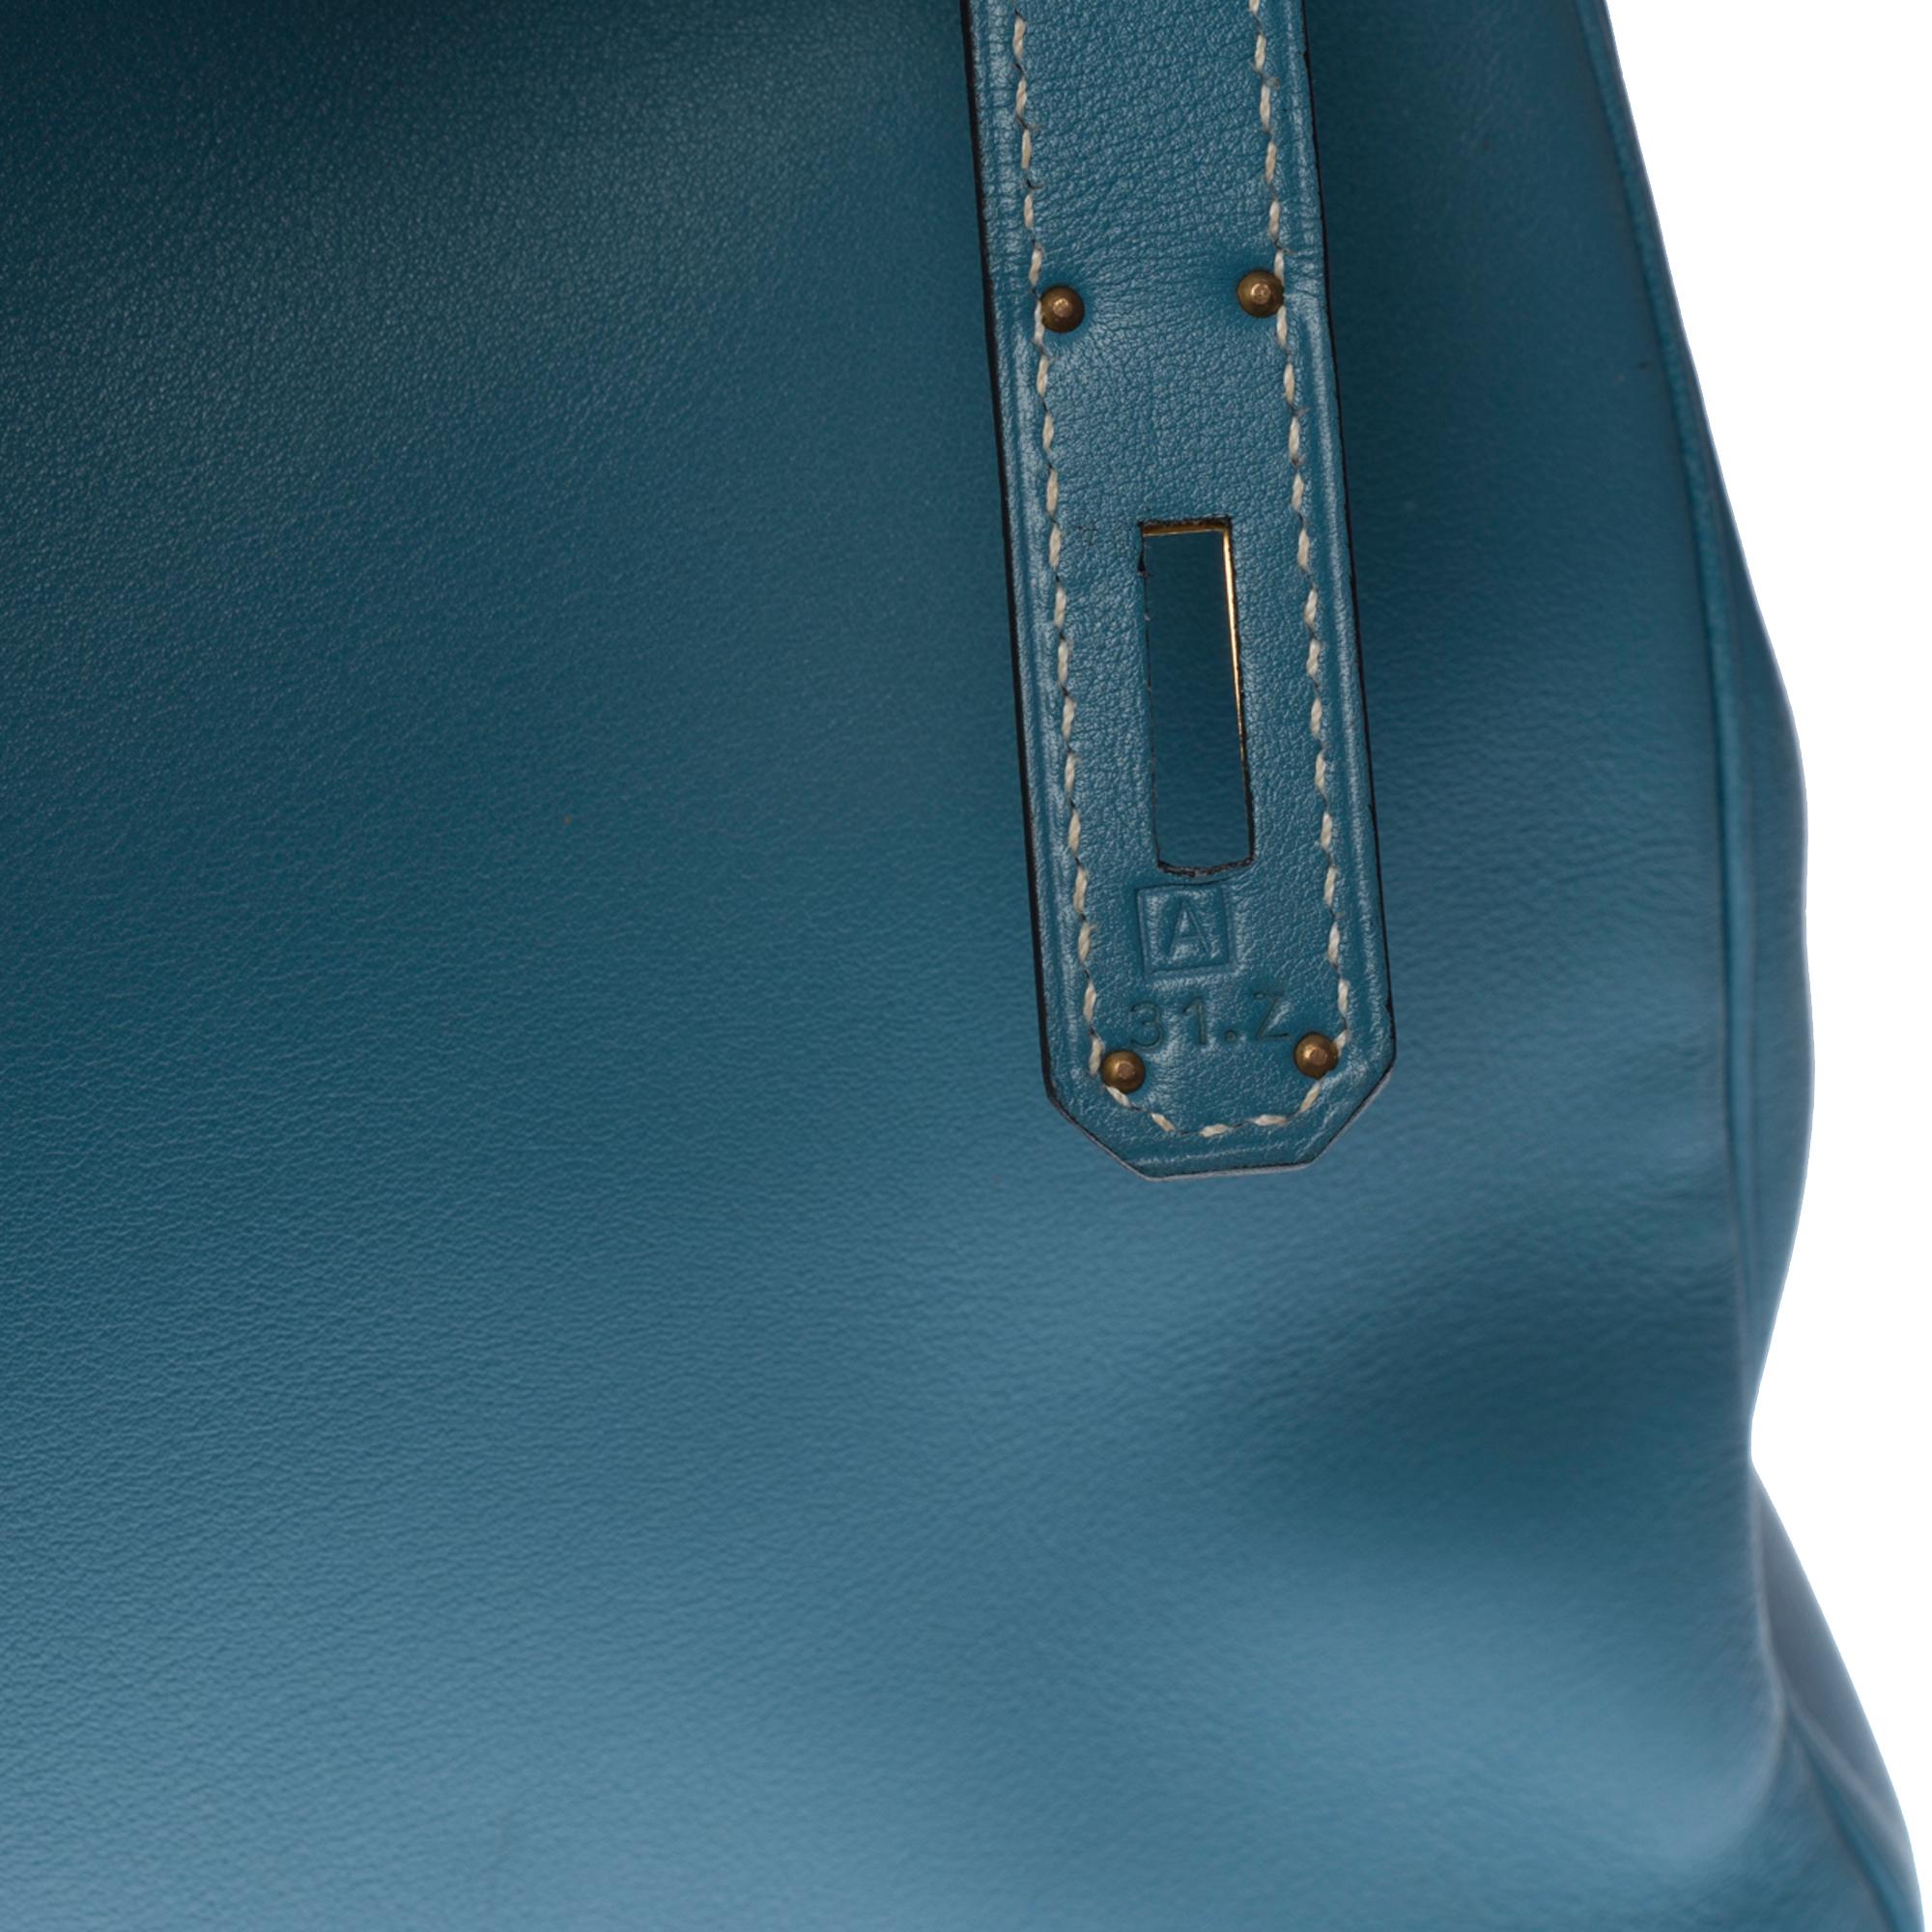 Blue Gorgeous Hermès Kelly 35 retourné handbag strap in blue jeans Swift leather, GHW